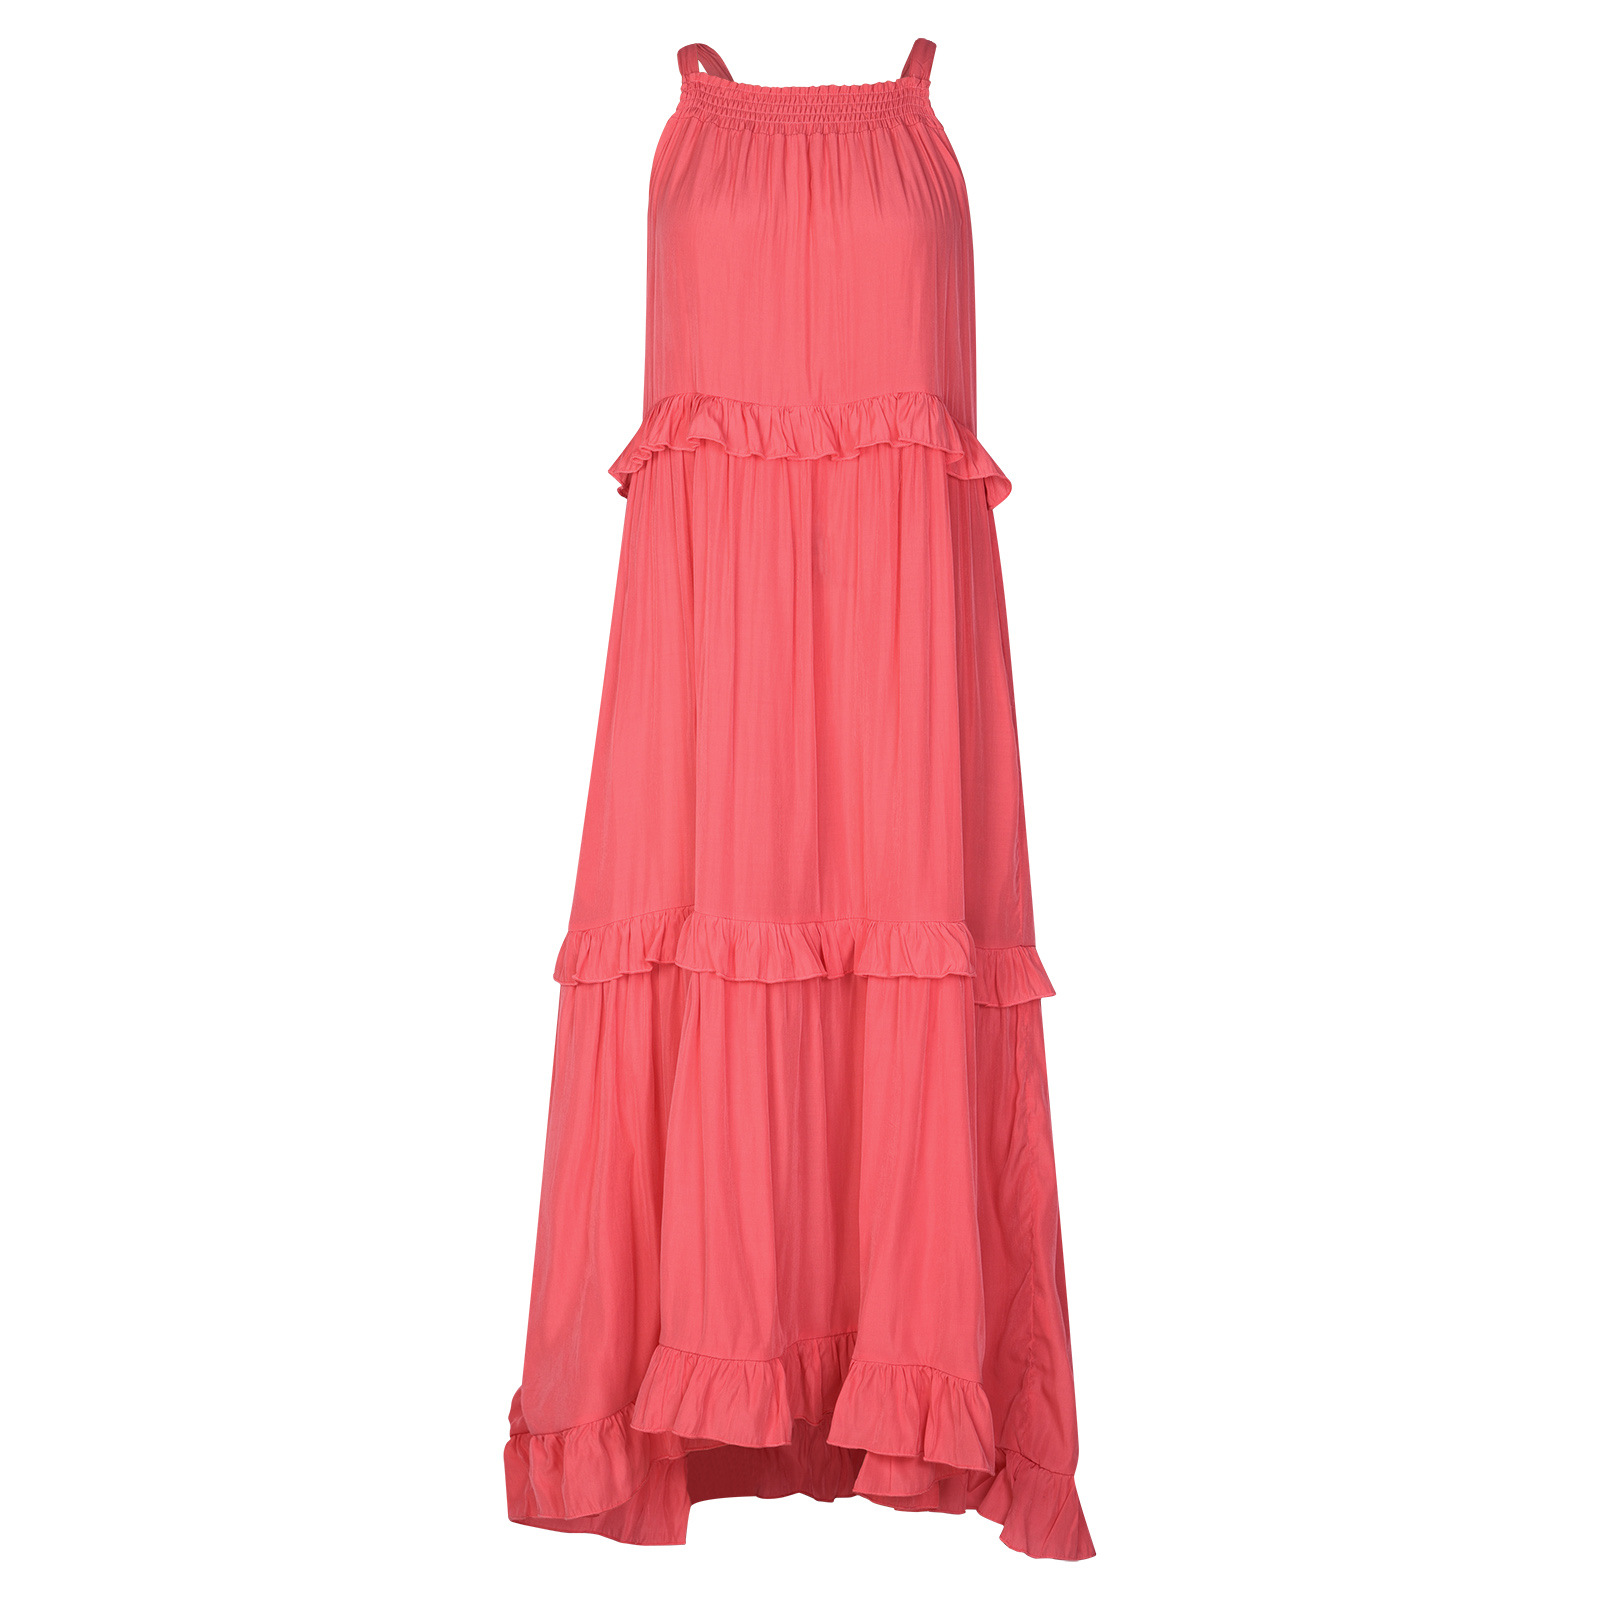 Irregular Asymmetric Tiered Dress - Dresses - Uniqistic.com